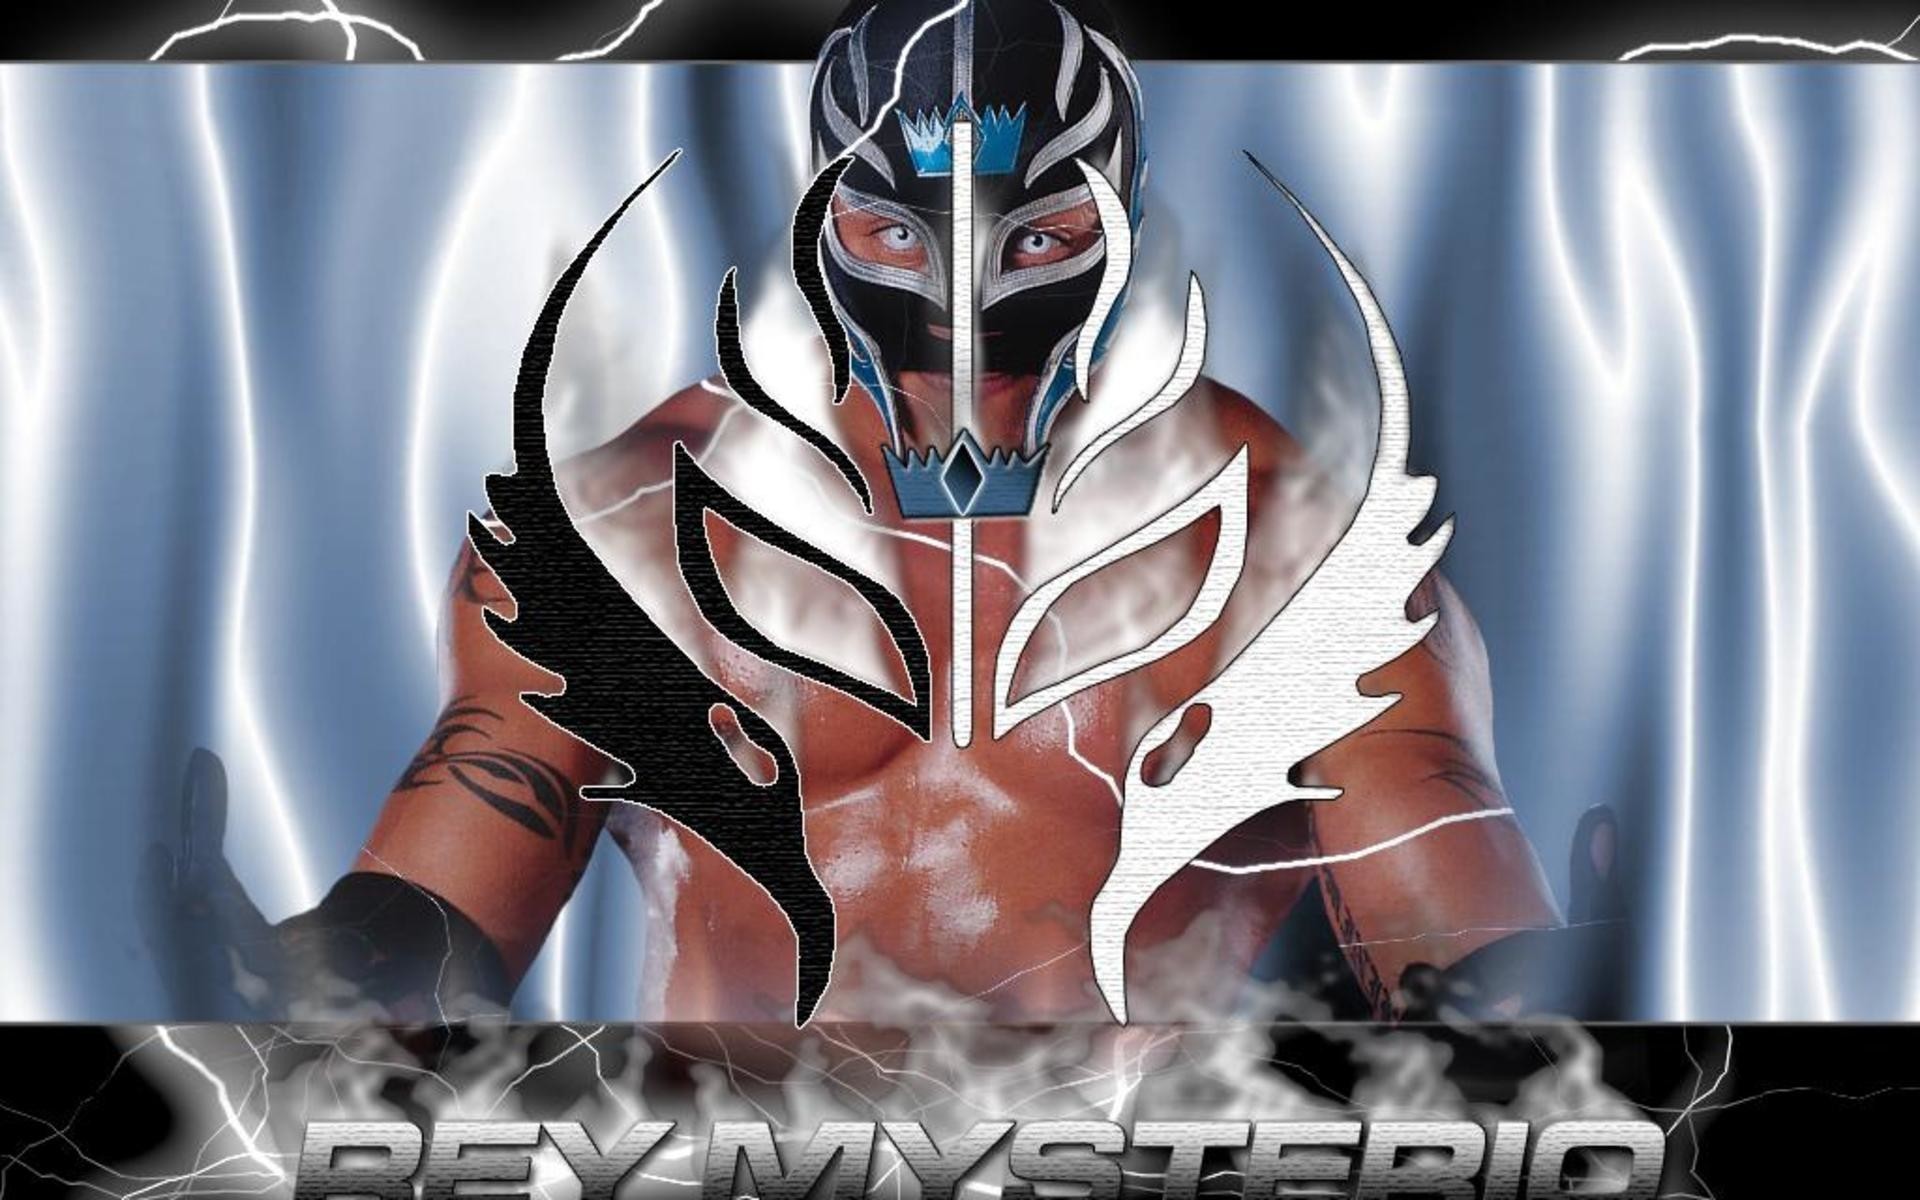 1920x1200  WWE Wallpapers HD Download Â· Download Â· Rey Mysterio ...